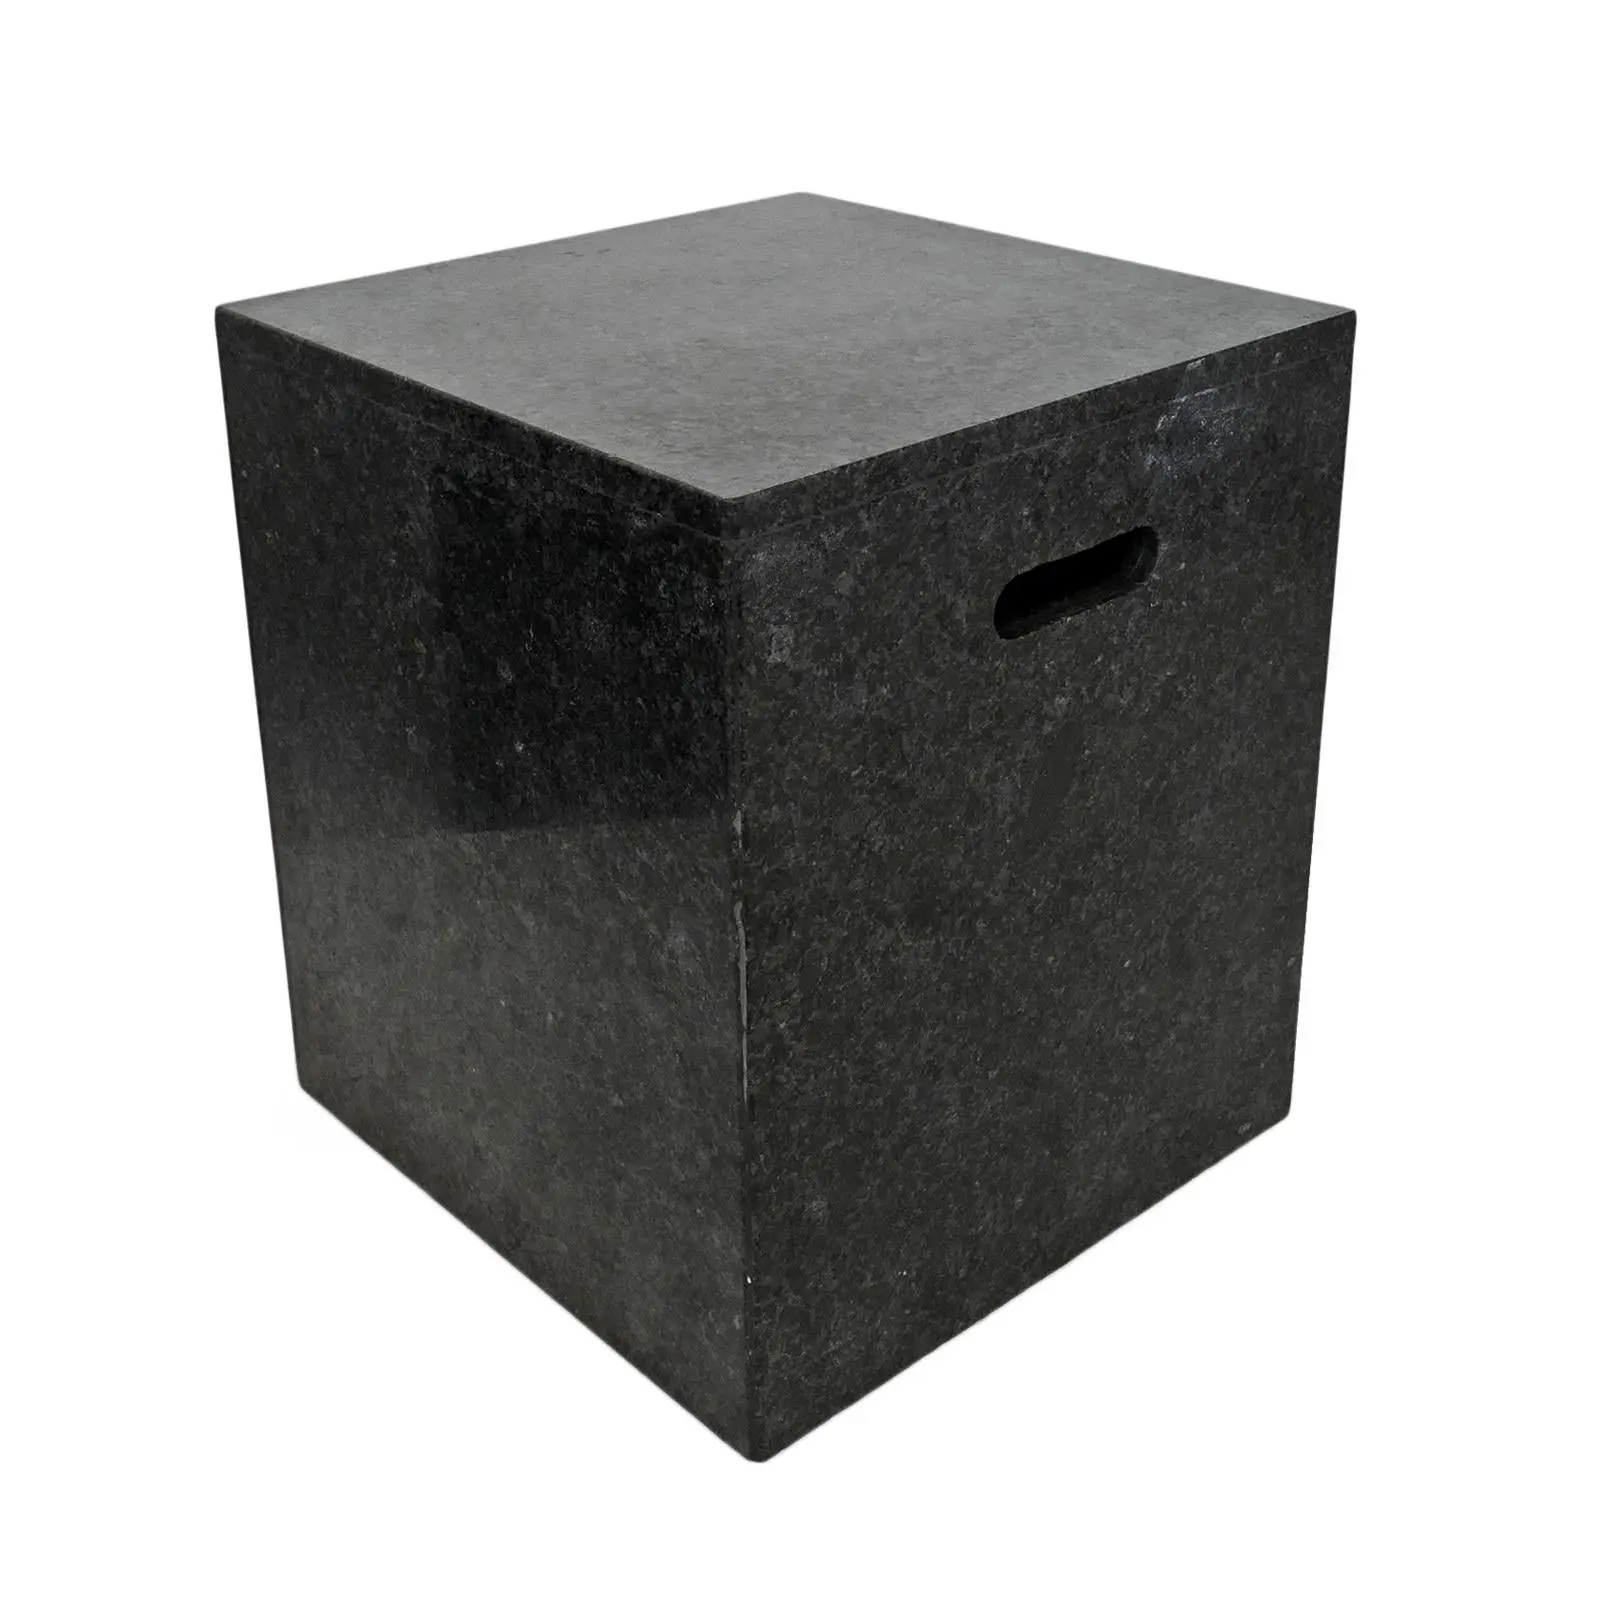 Moderner schwarzer Marmor würfel hocker tisch, schwarzer Marmor würfel hocker Tisch möbel, Marmor block würfel